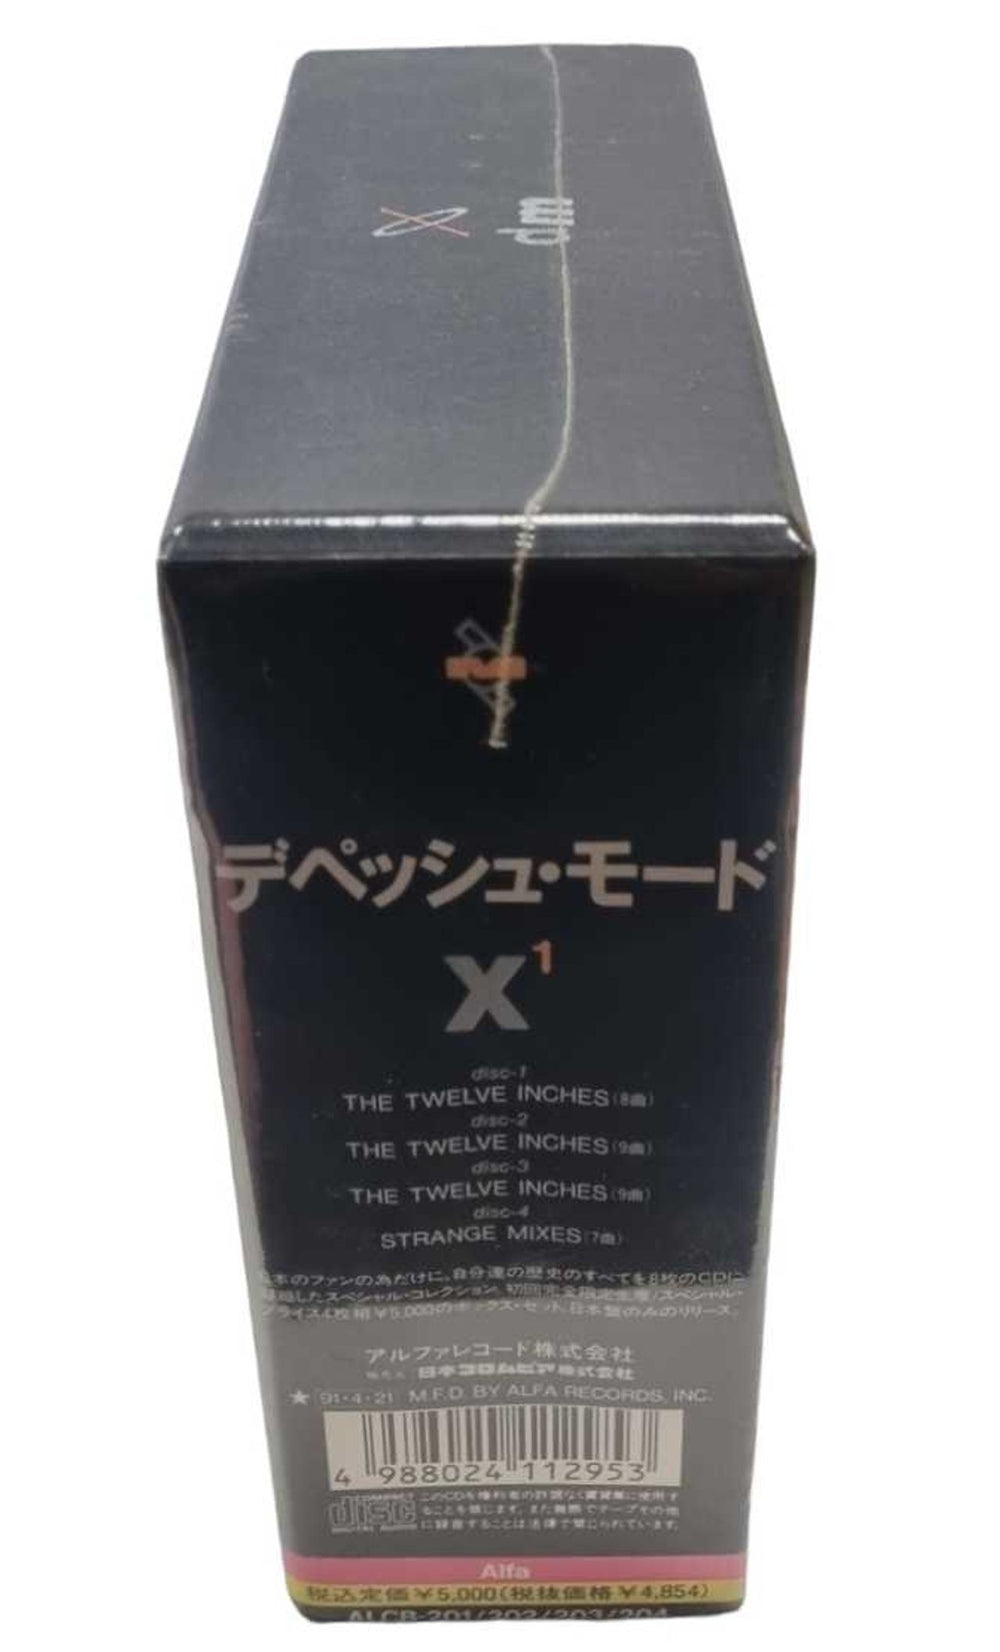 Depeche Mode X1 (one) - Complete - Sealed Japanese CD Album Box Set DEPDXXO134000